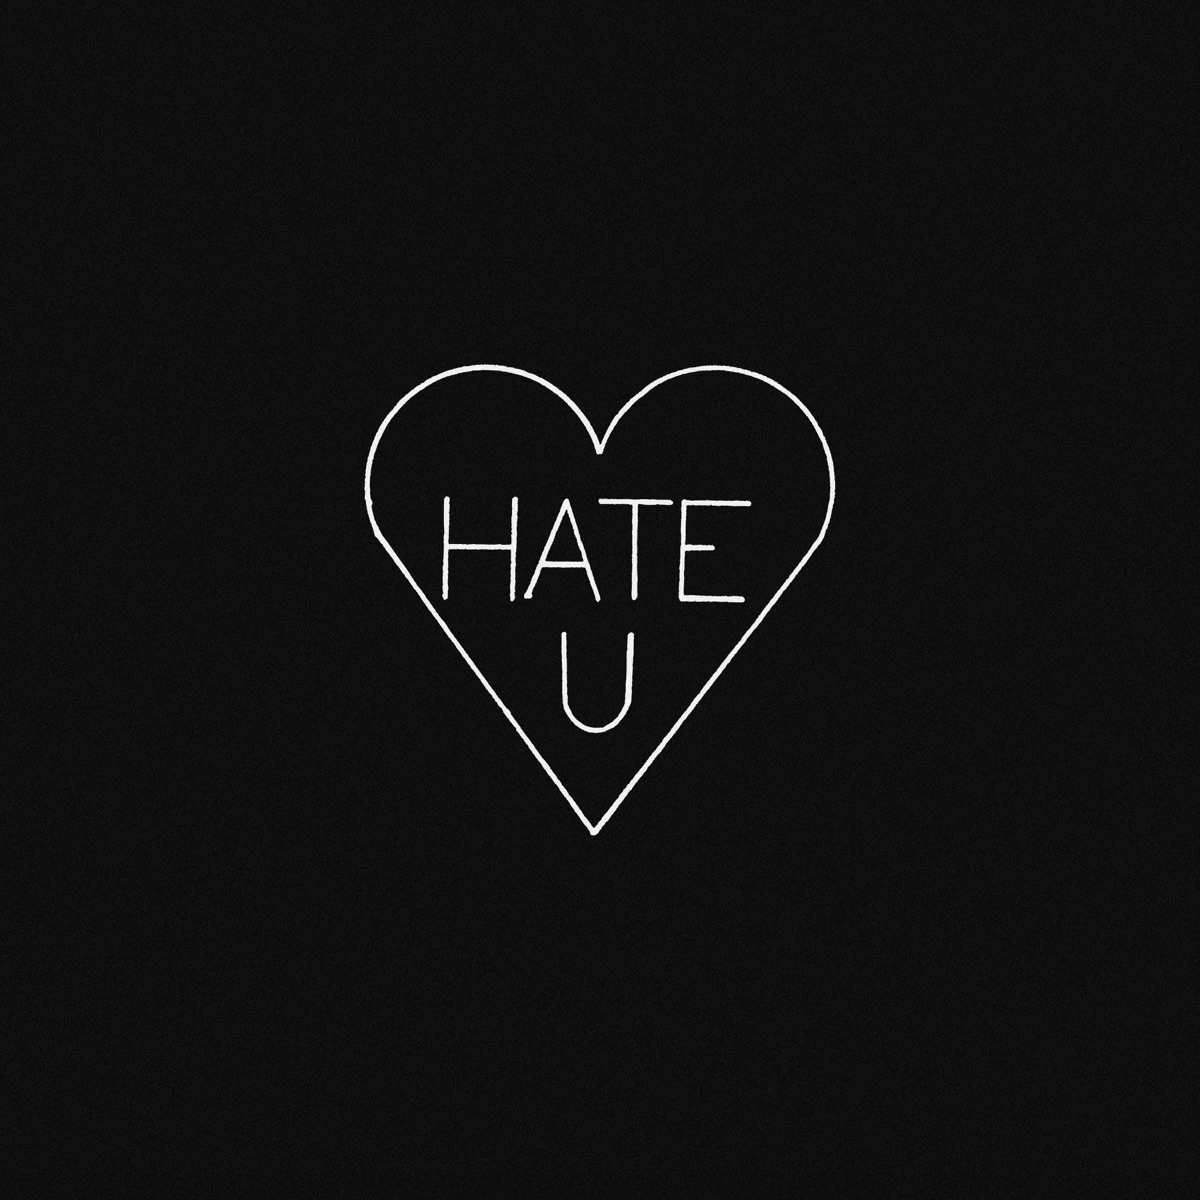 Hate U - Single by LØLØ on Apple Music